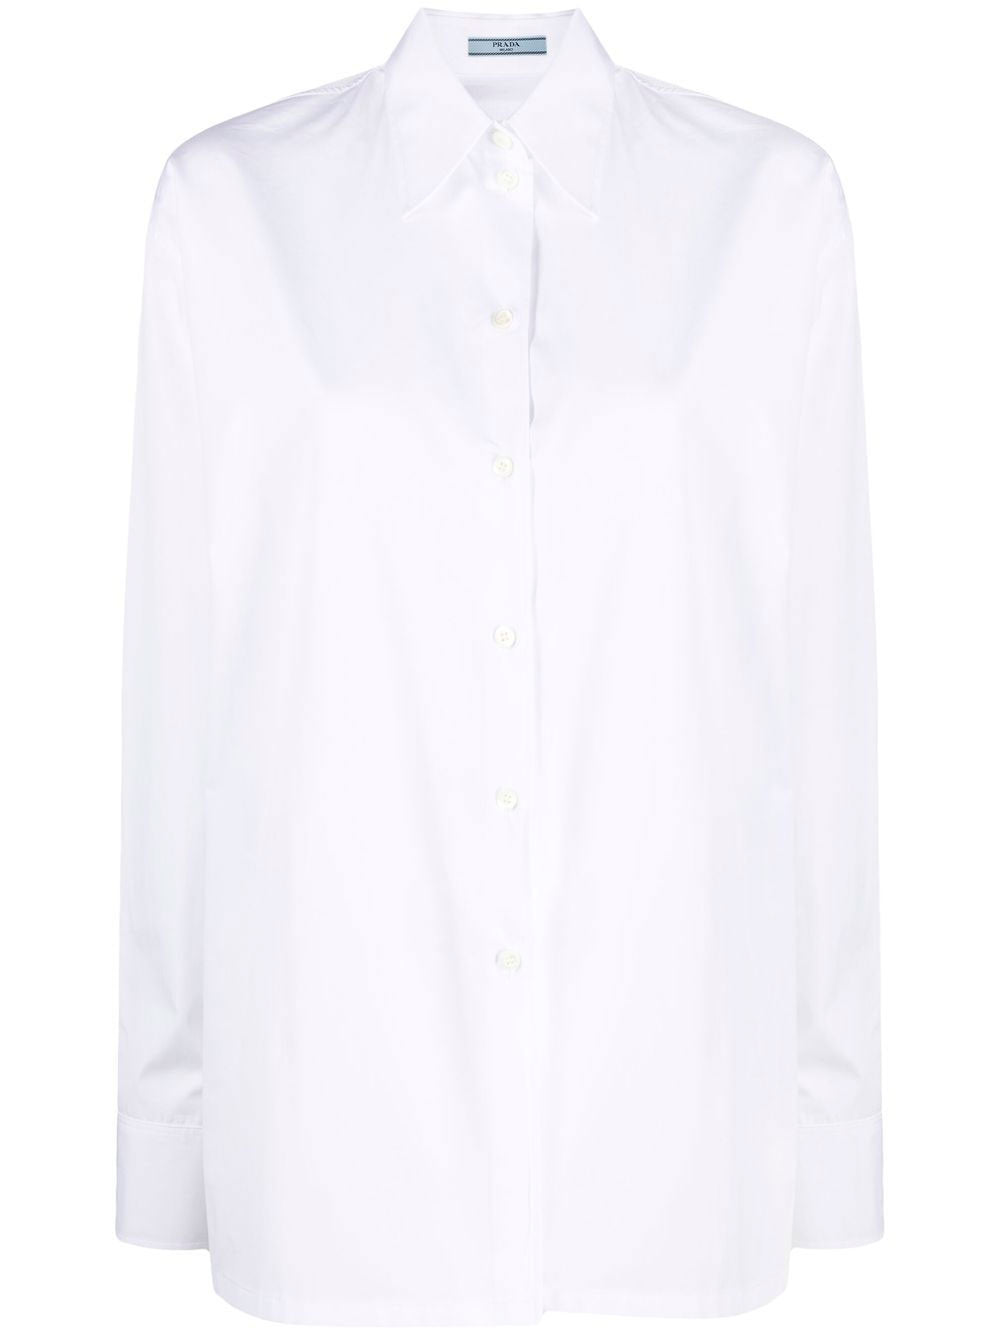 Long-sleeved button-up shirt